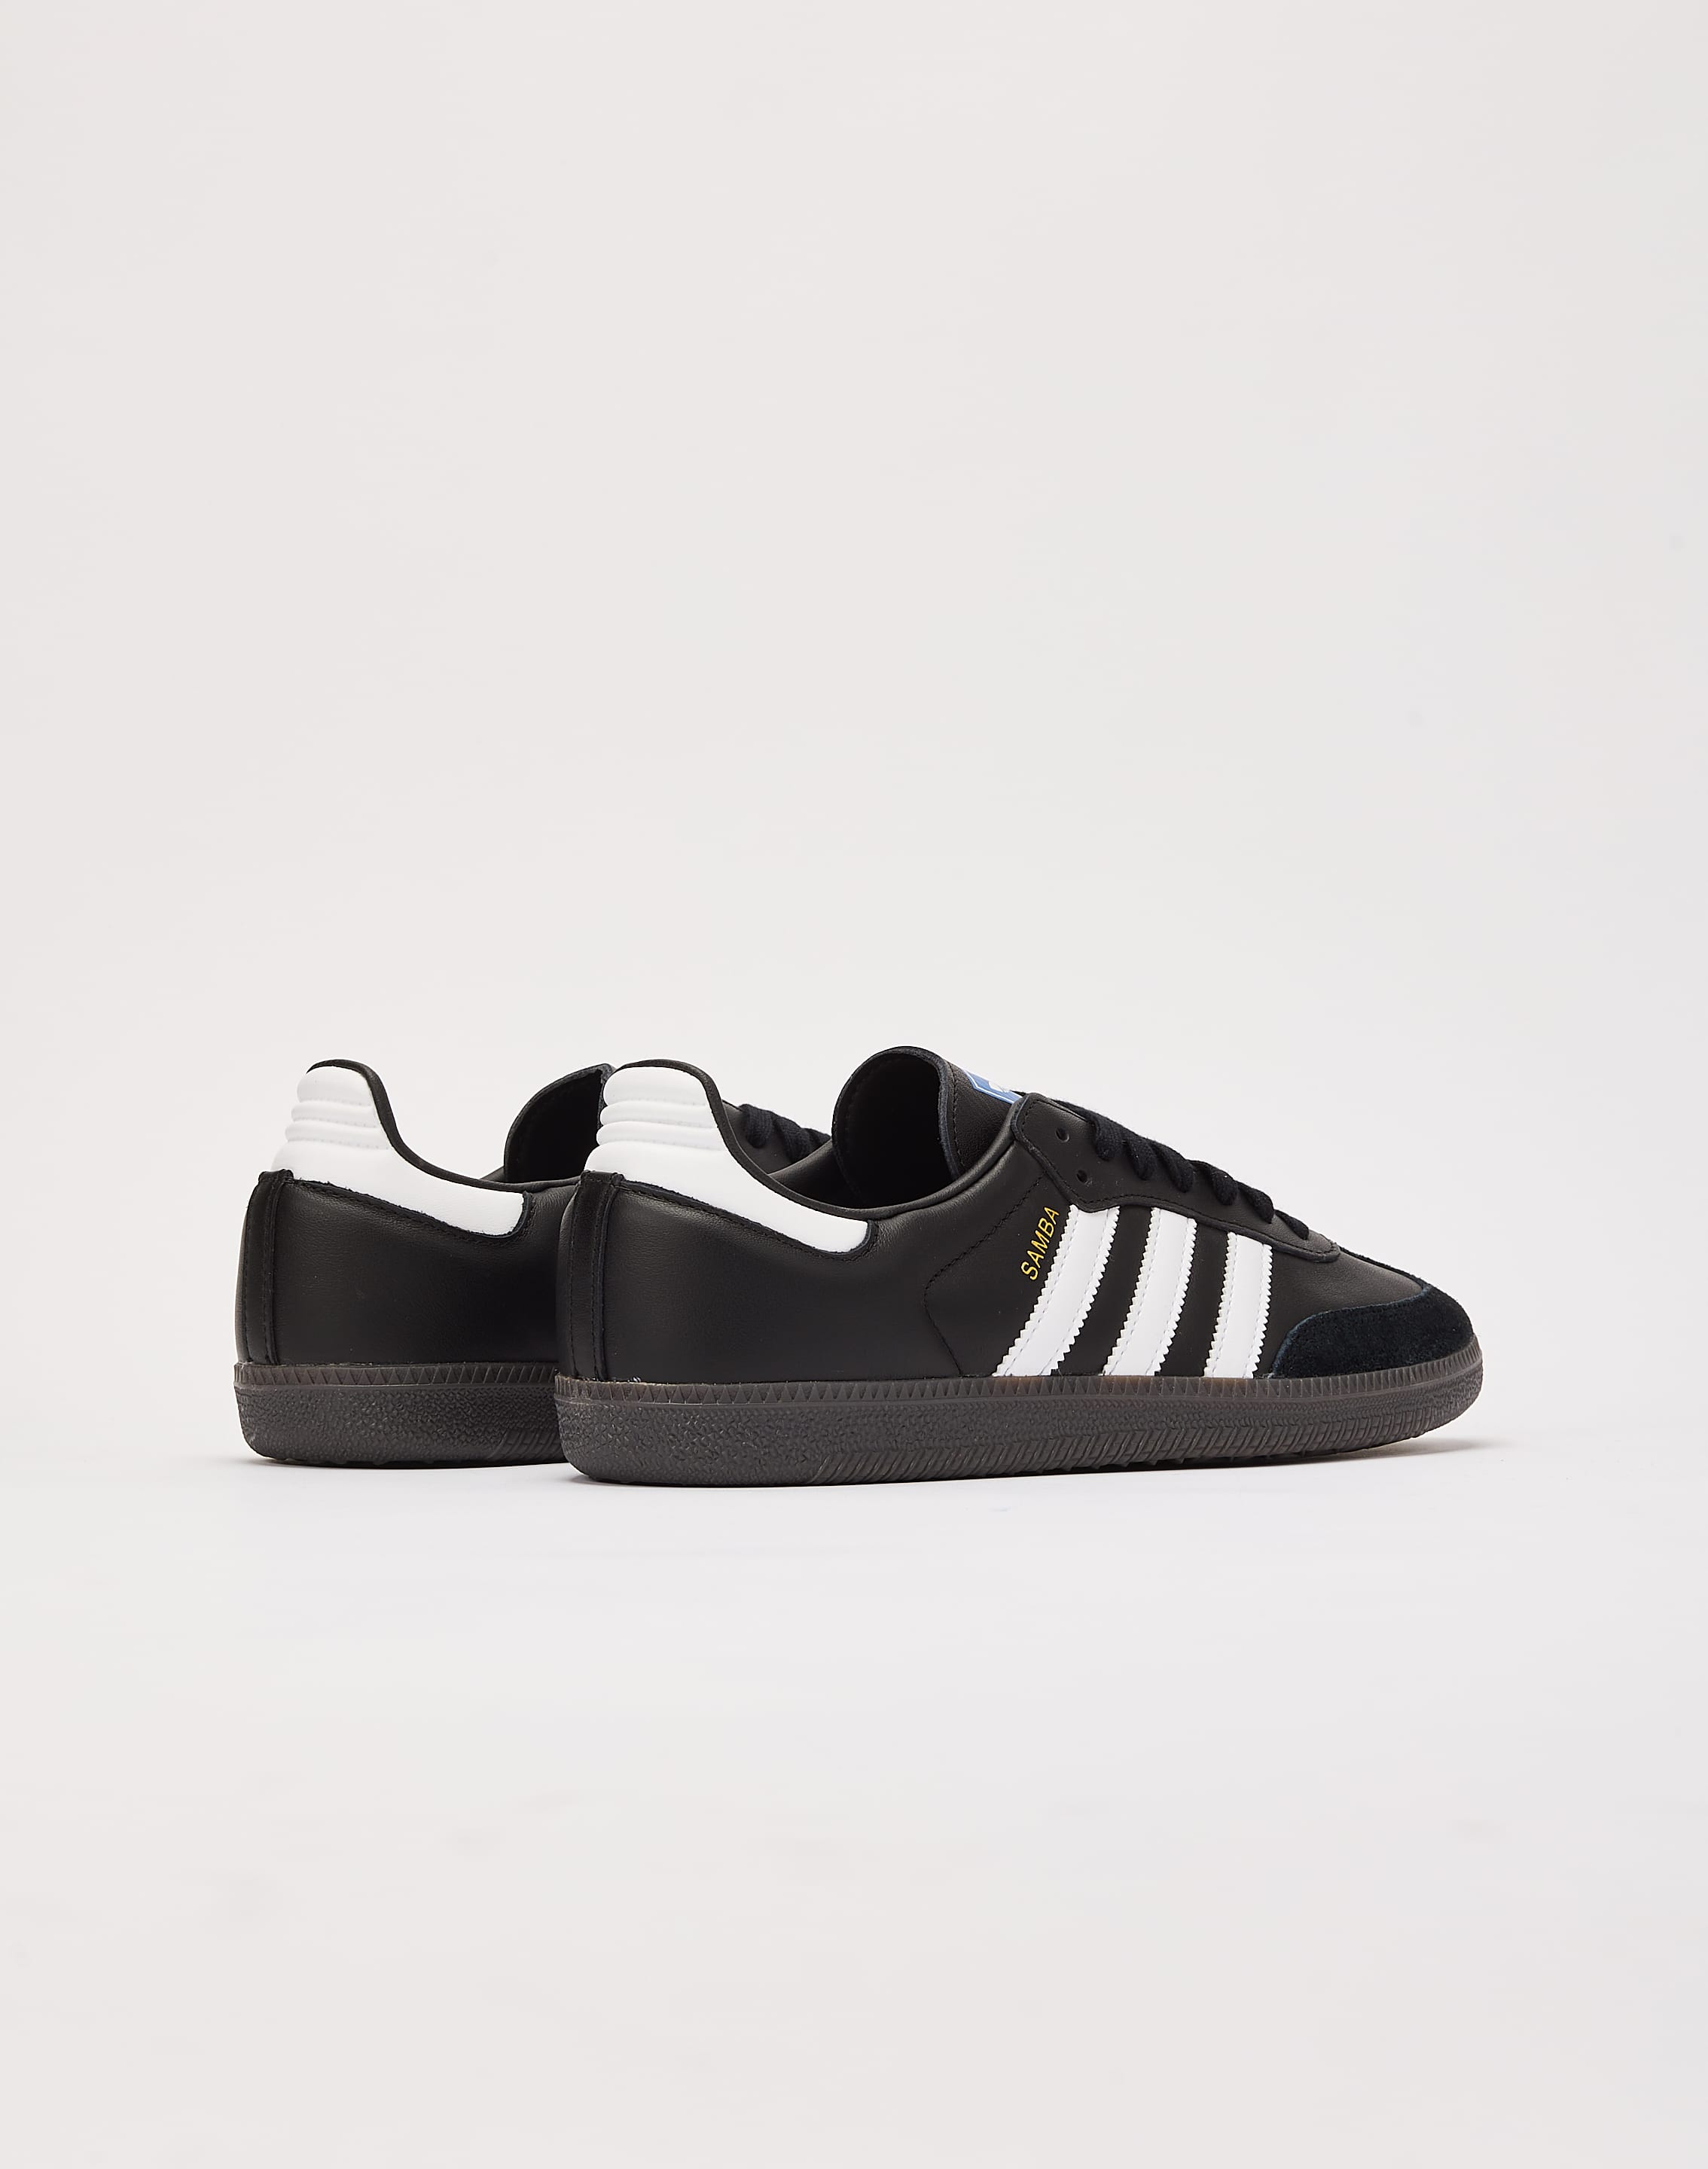 Adidas Samba Classic Soccer Shoes White-Black - 11.5